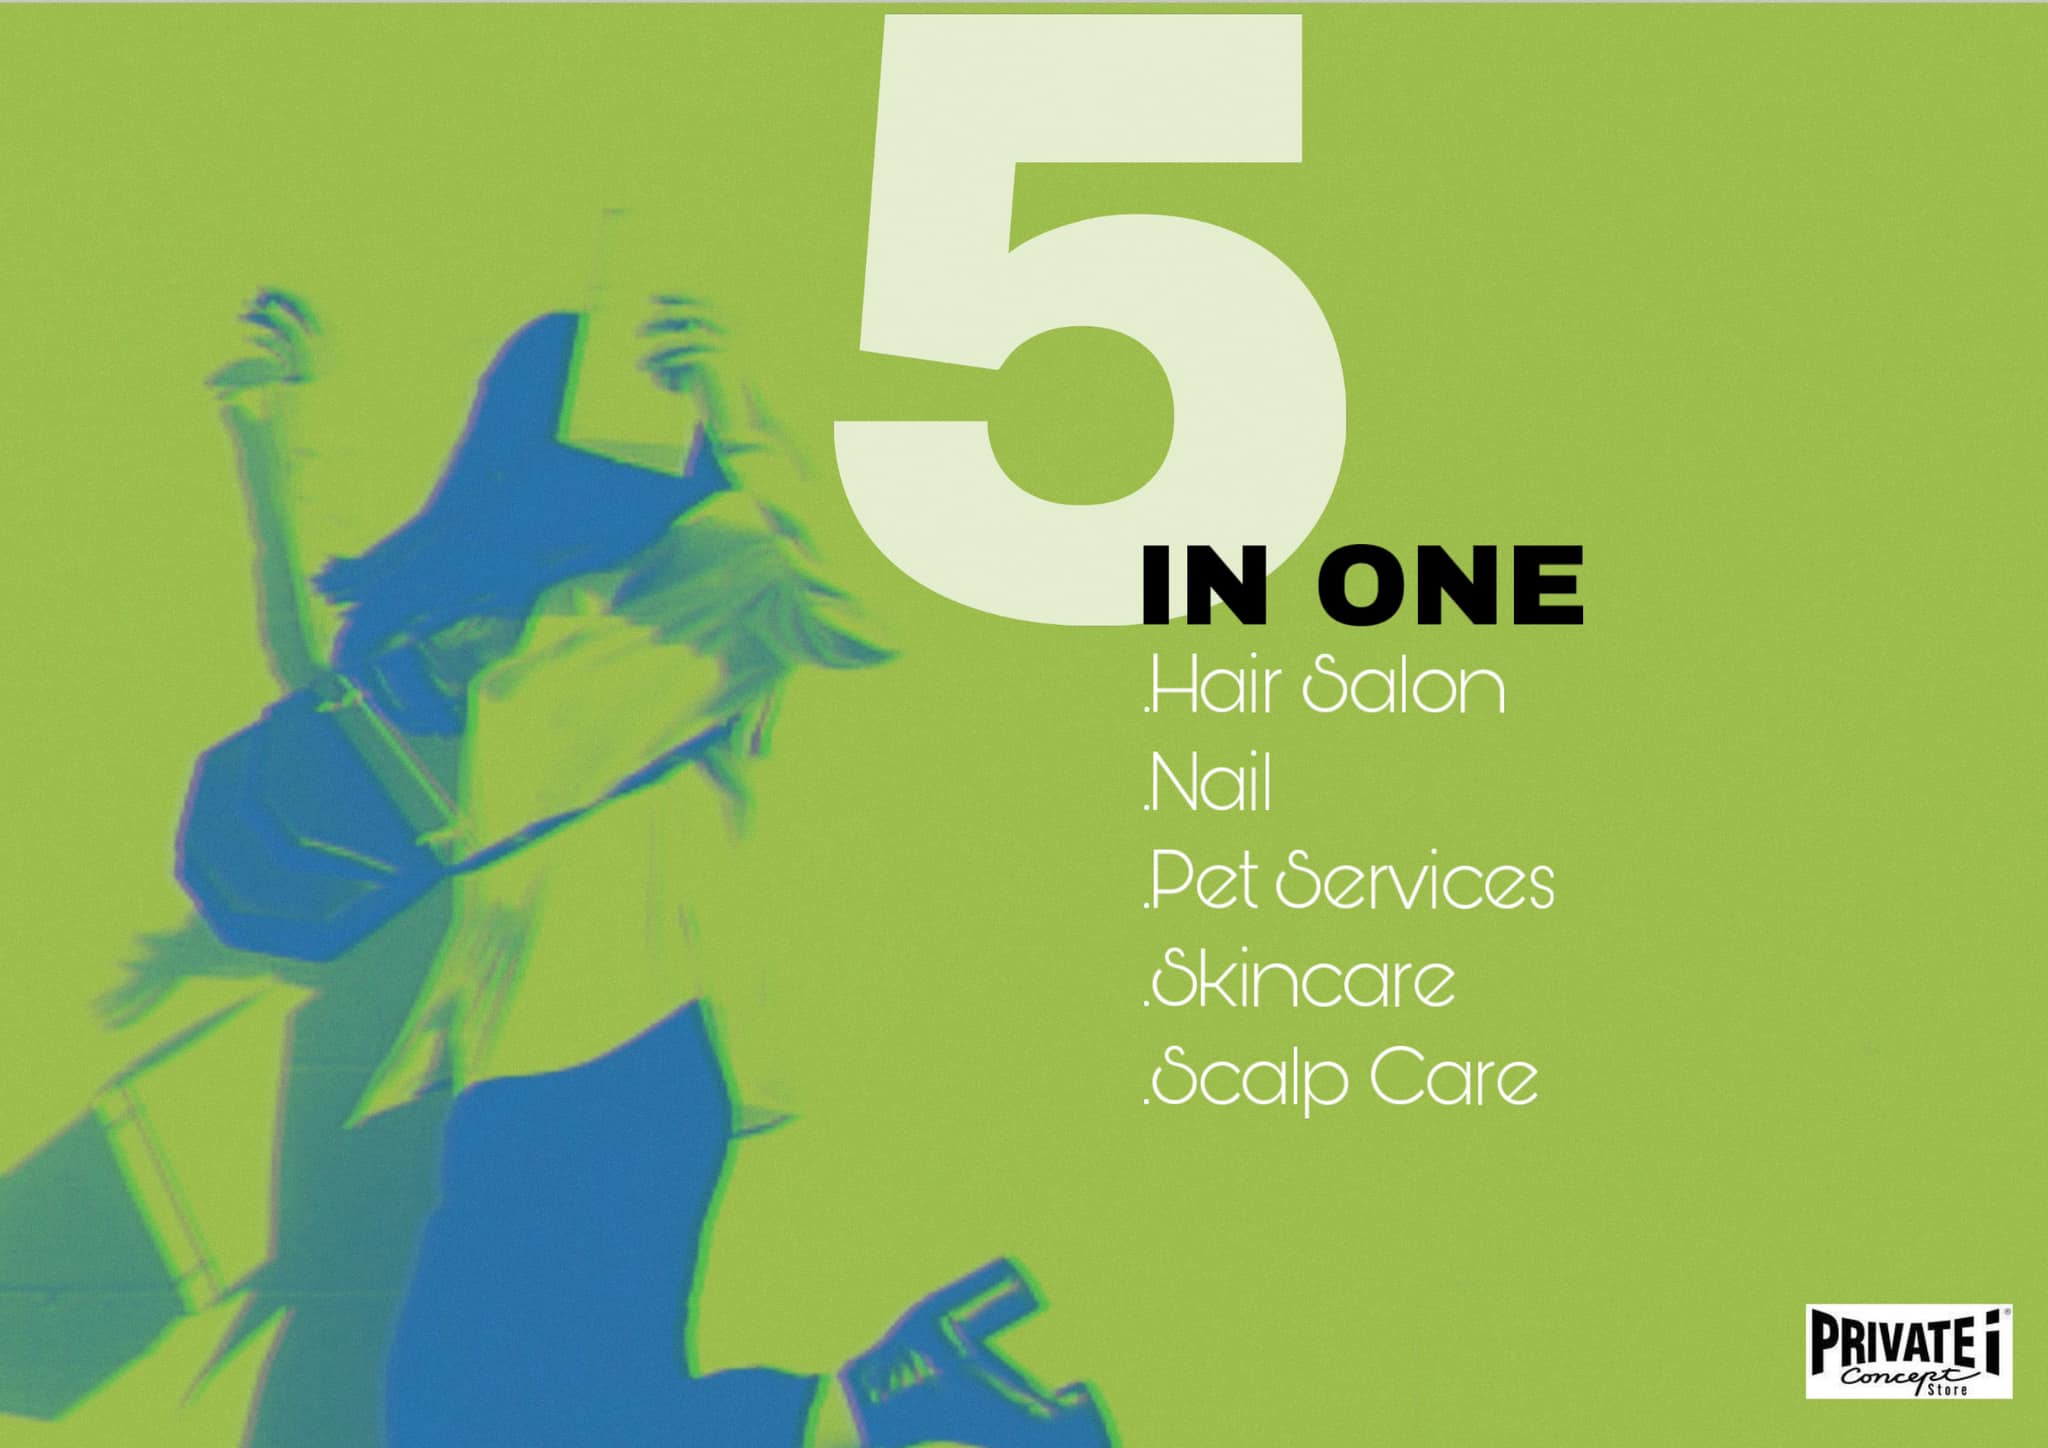 〈i_cnceptstore〉2020，Private I Concept Store 以5 in ONE 概念，為大家帶來由頭到腳，以至你心愛寵物的扮靚靚及健康服務。 01 Hair Salon：專業髮型師提供城中最好、最前線的髮型服務。